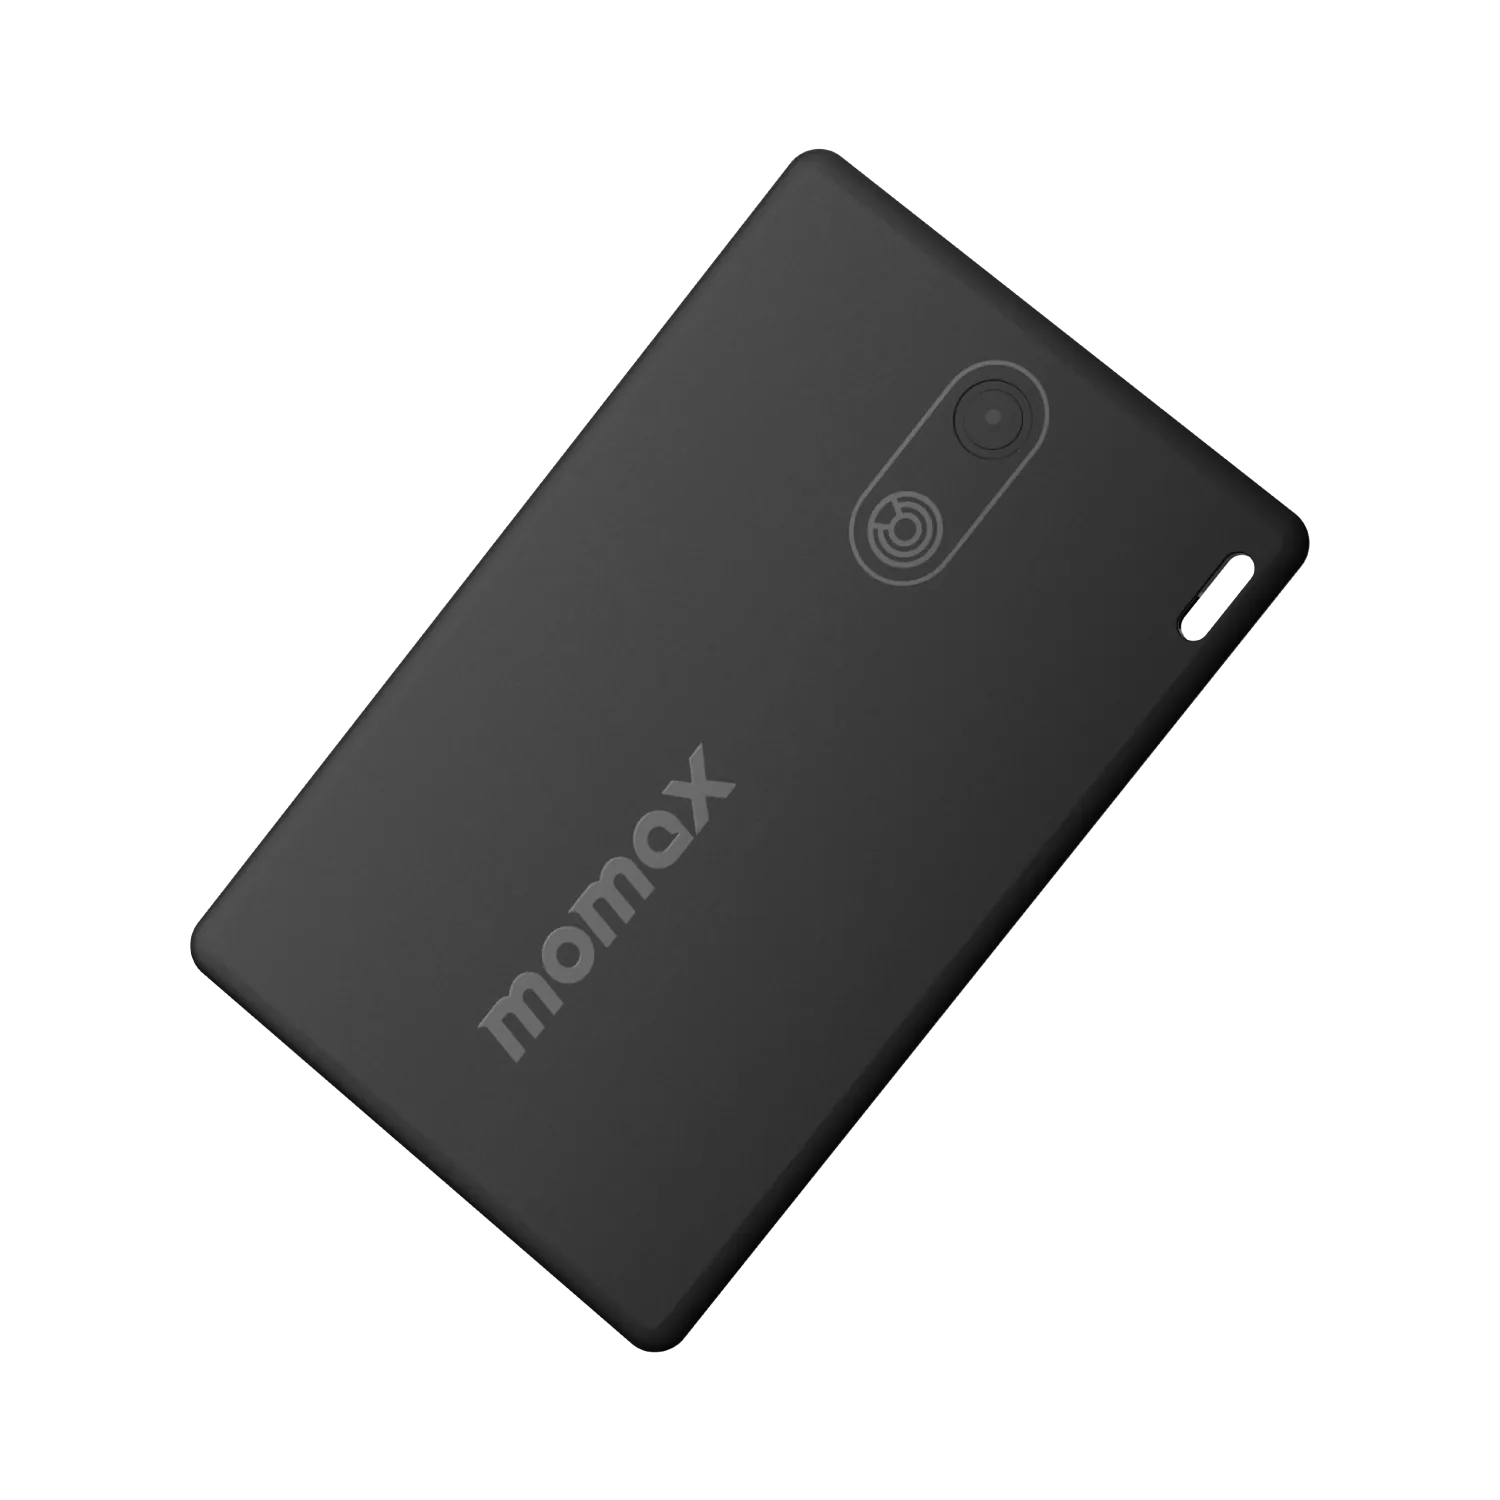 Momax PINCARD Find My 超薄全球定位器 BR6 - 黑色